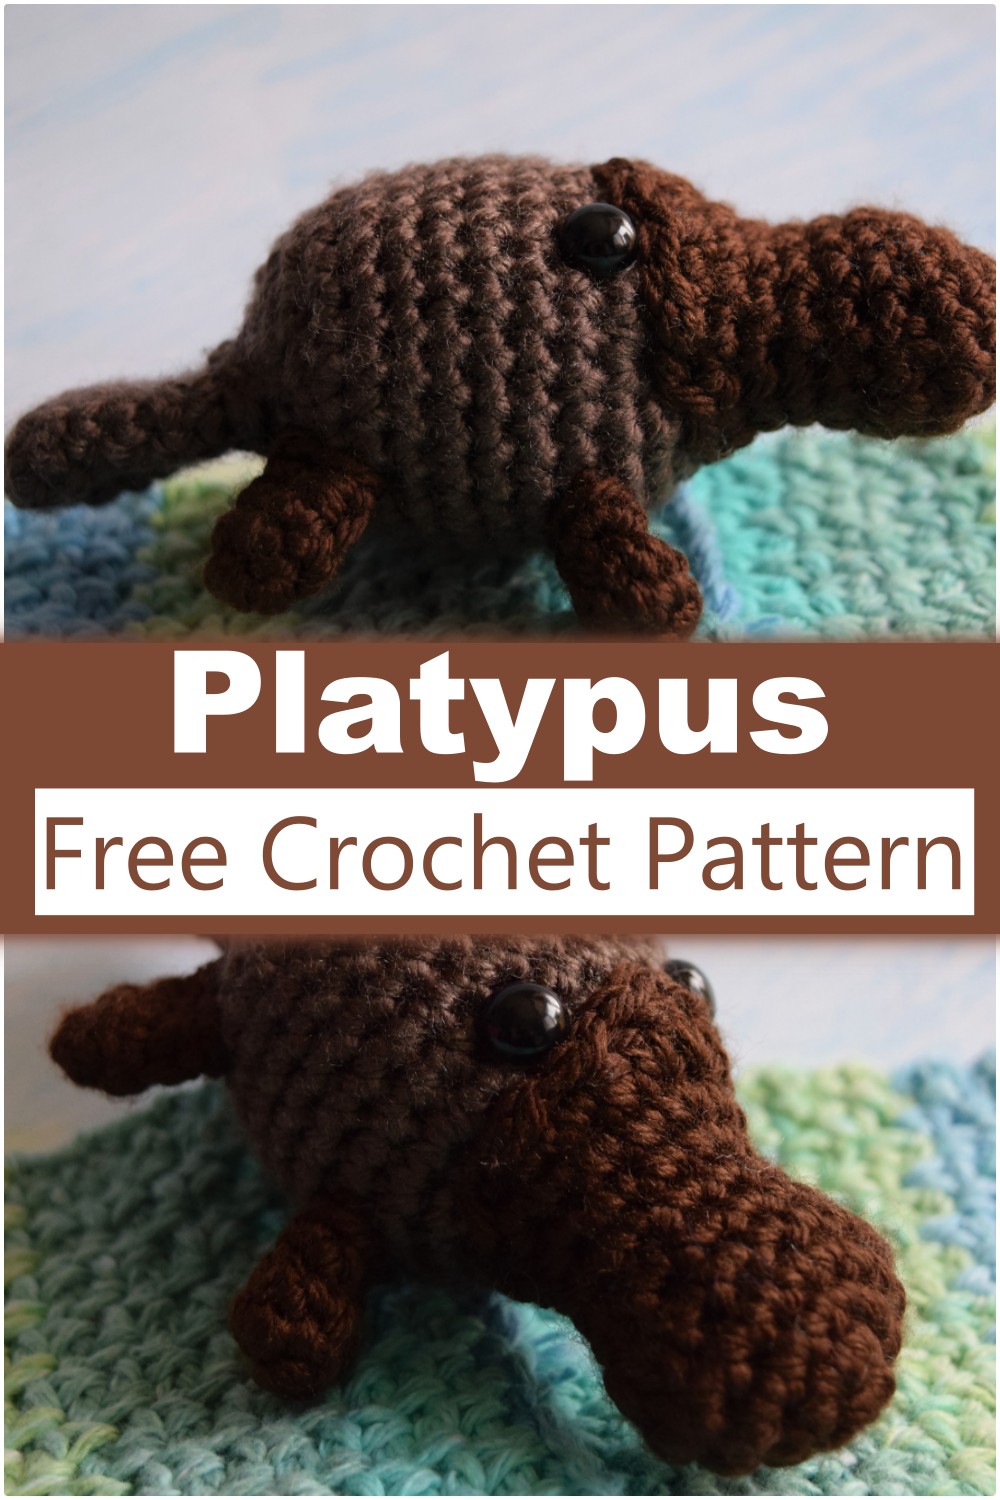 Platypus Softie To Crocheting